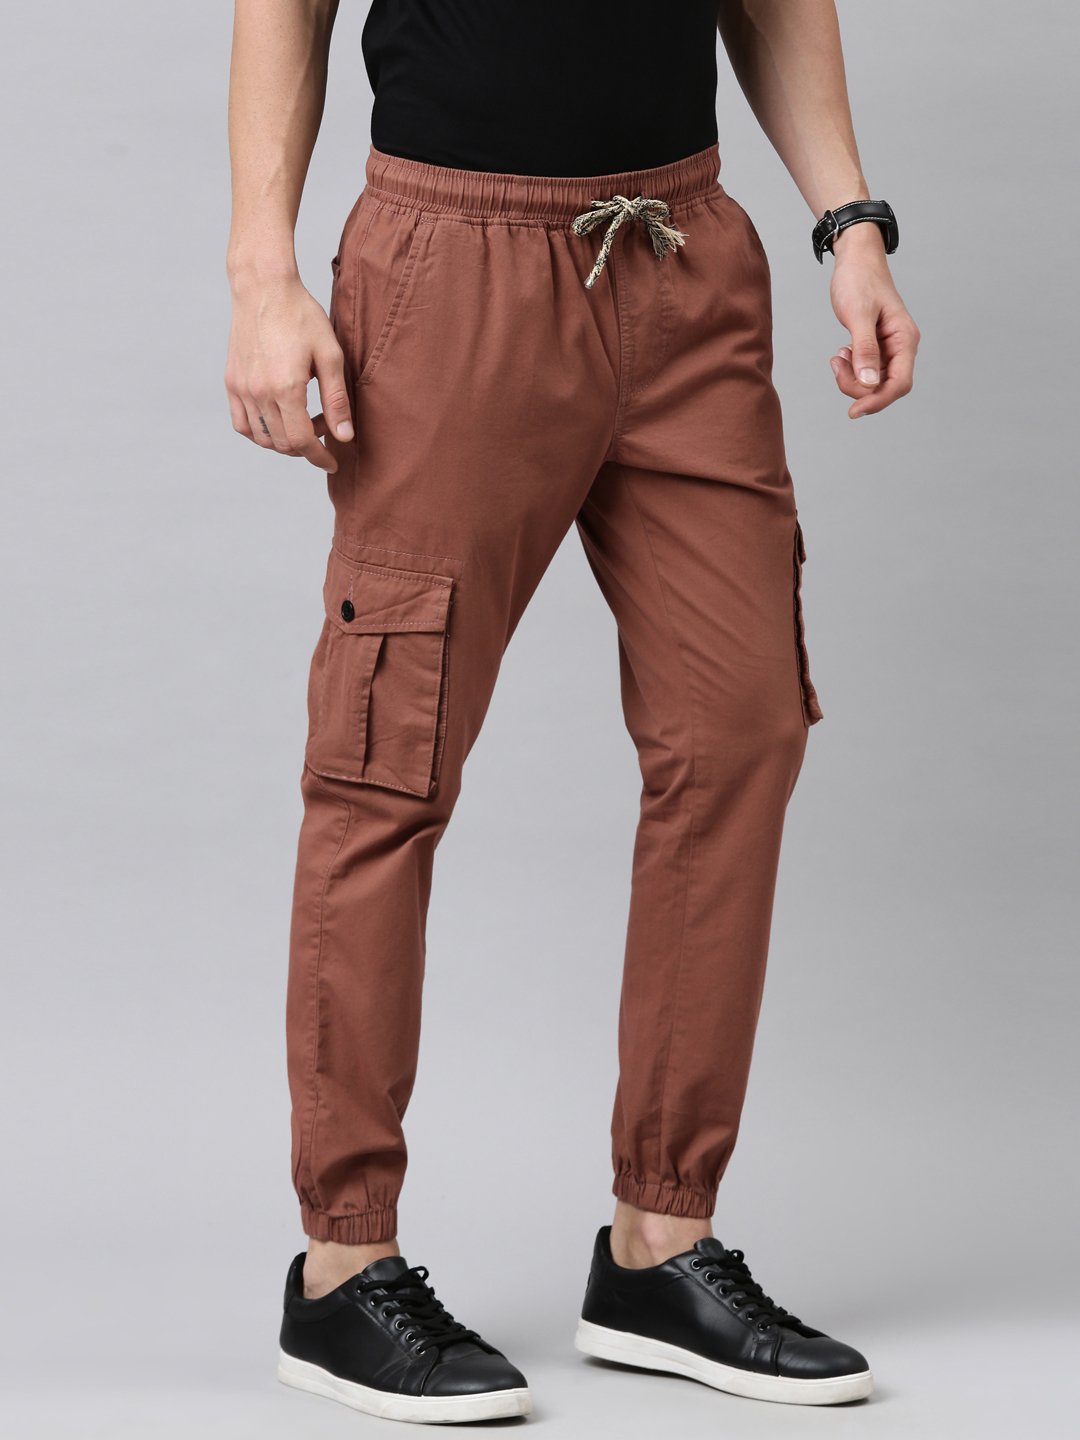 Buy VESPER Men's Slim Fit Cargo Trouser : Reliable Utility Wear for The  Modern Men|Cotton Spandex Cargo |Mens Cargo |Casual Bottom Wear Khaki at  Amazon.in